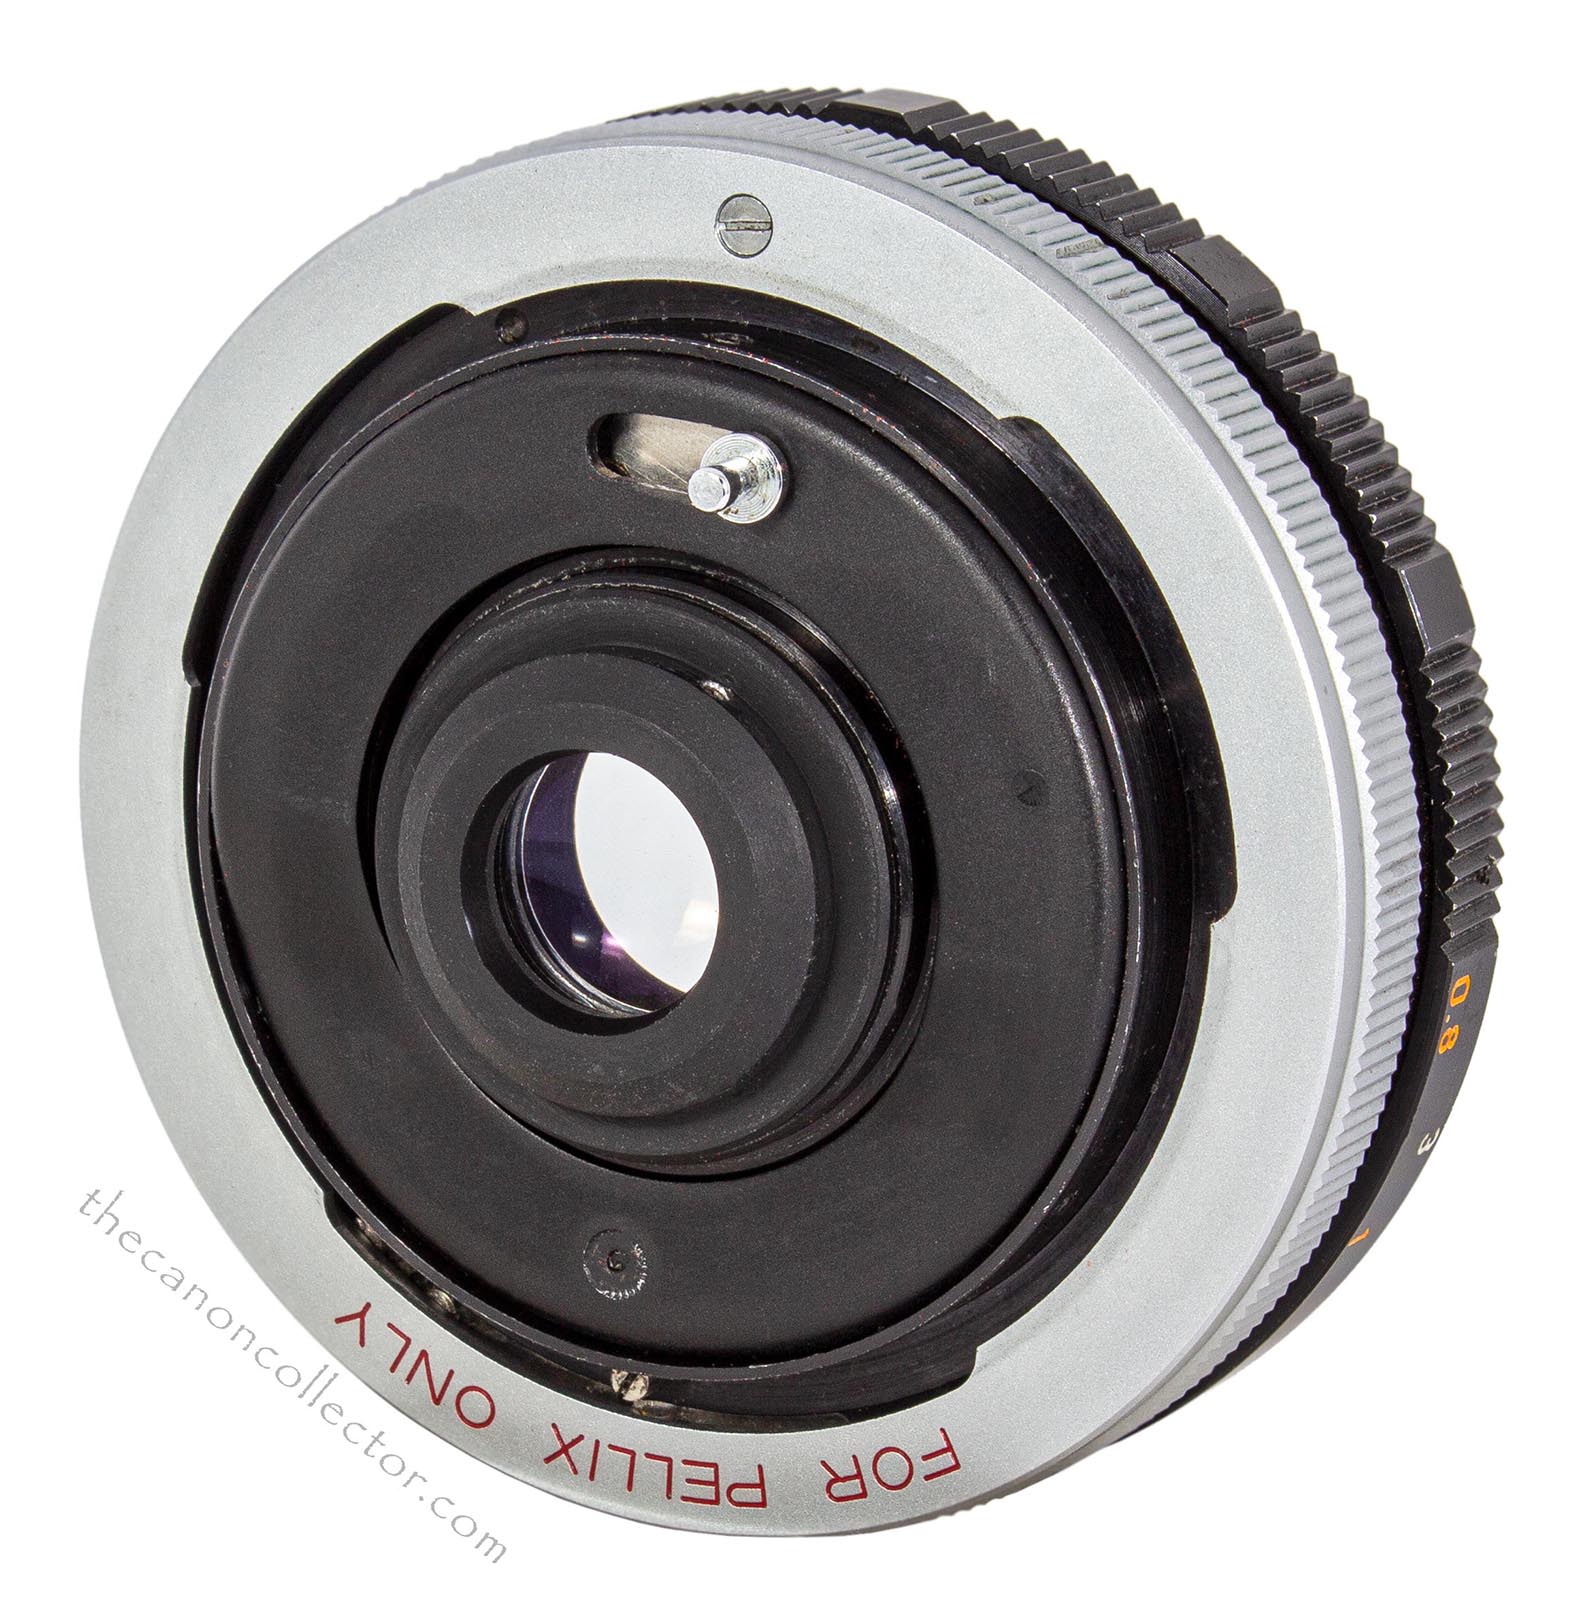 FPL 38mm f/2.8 Lens